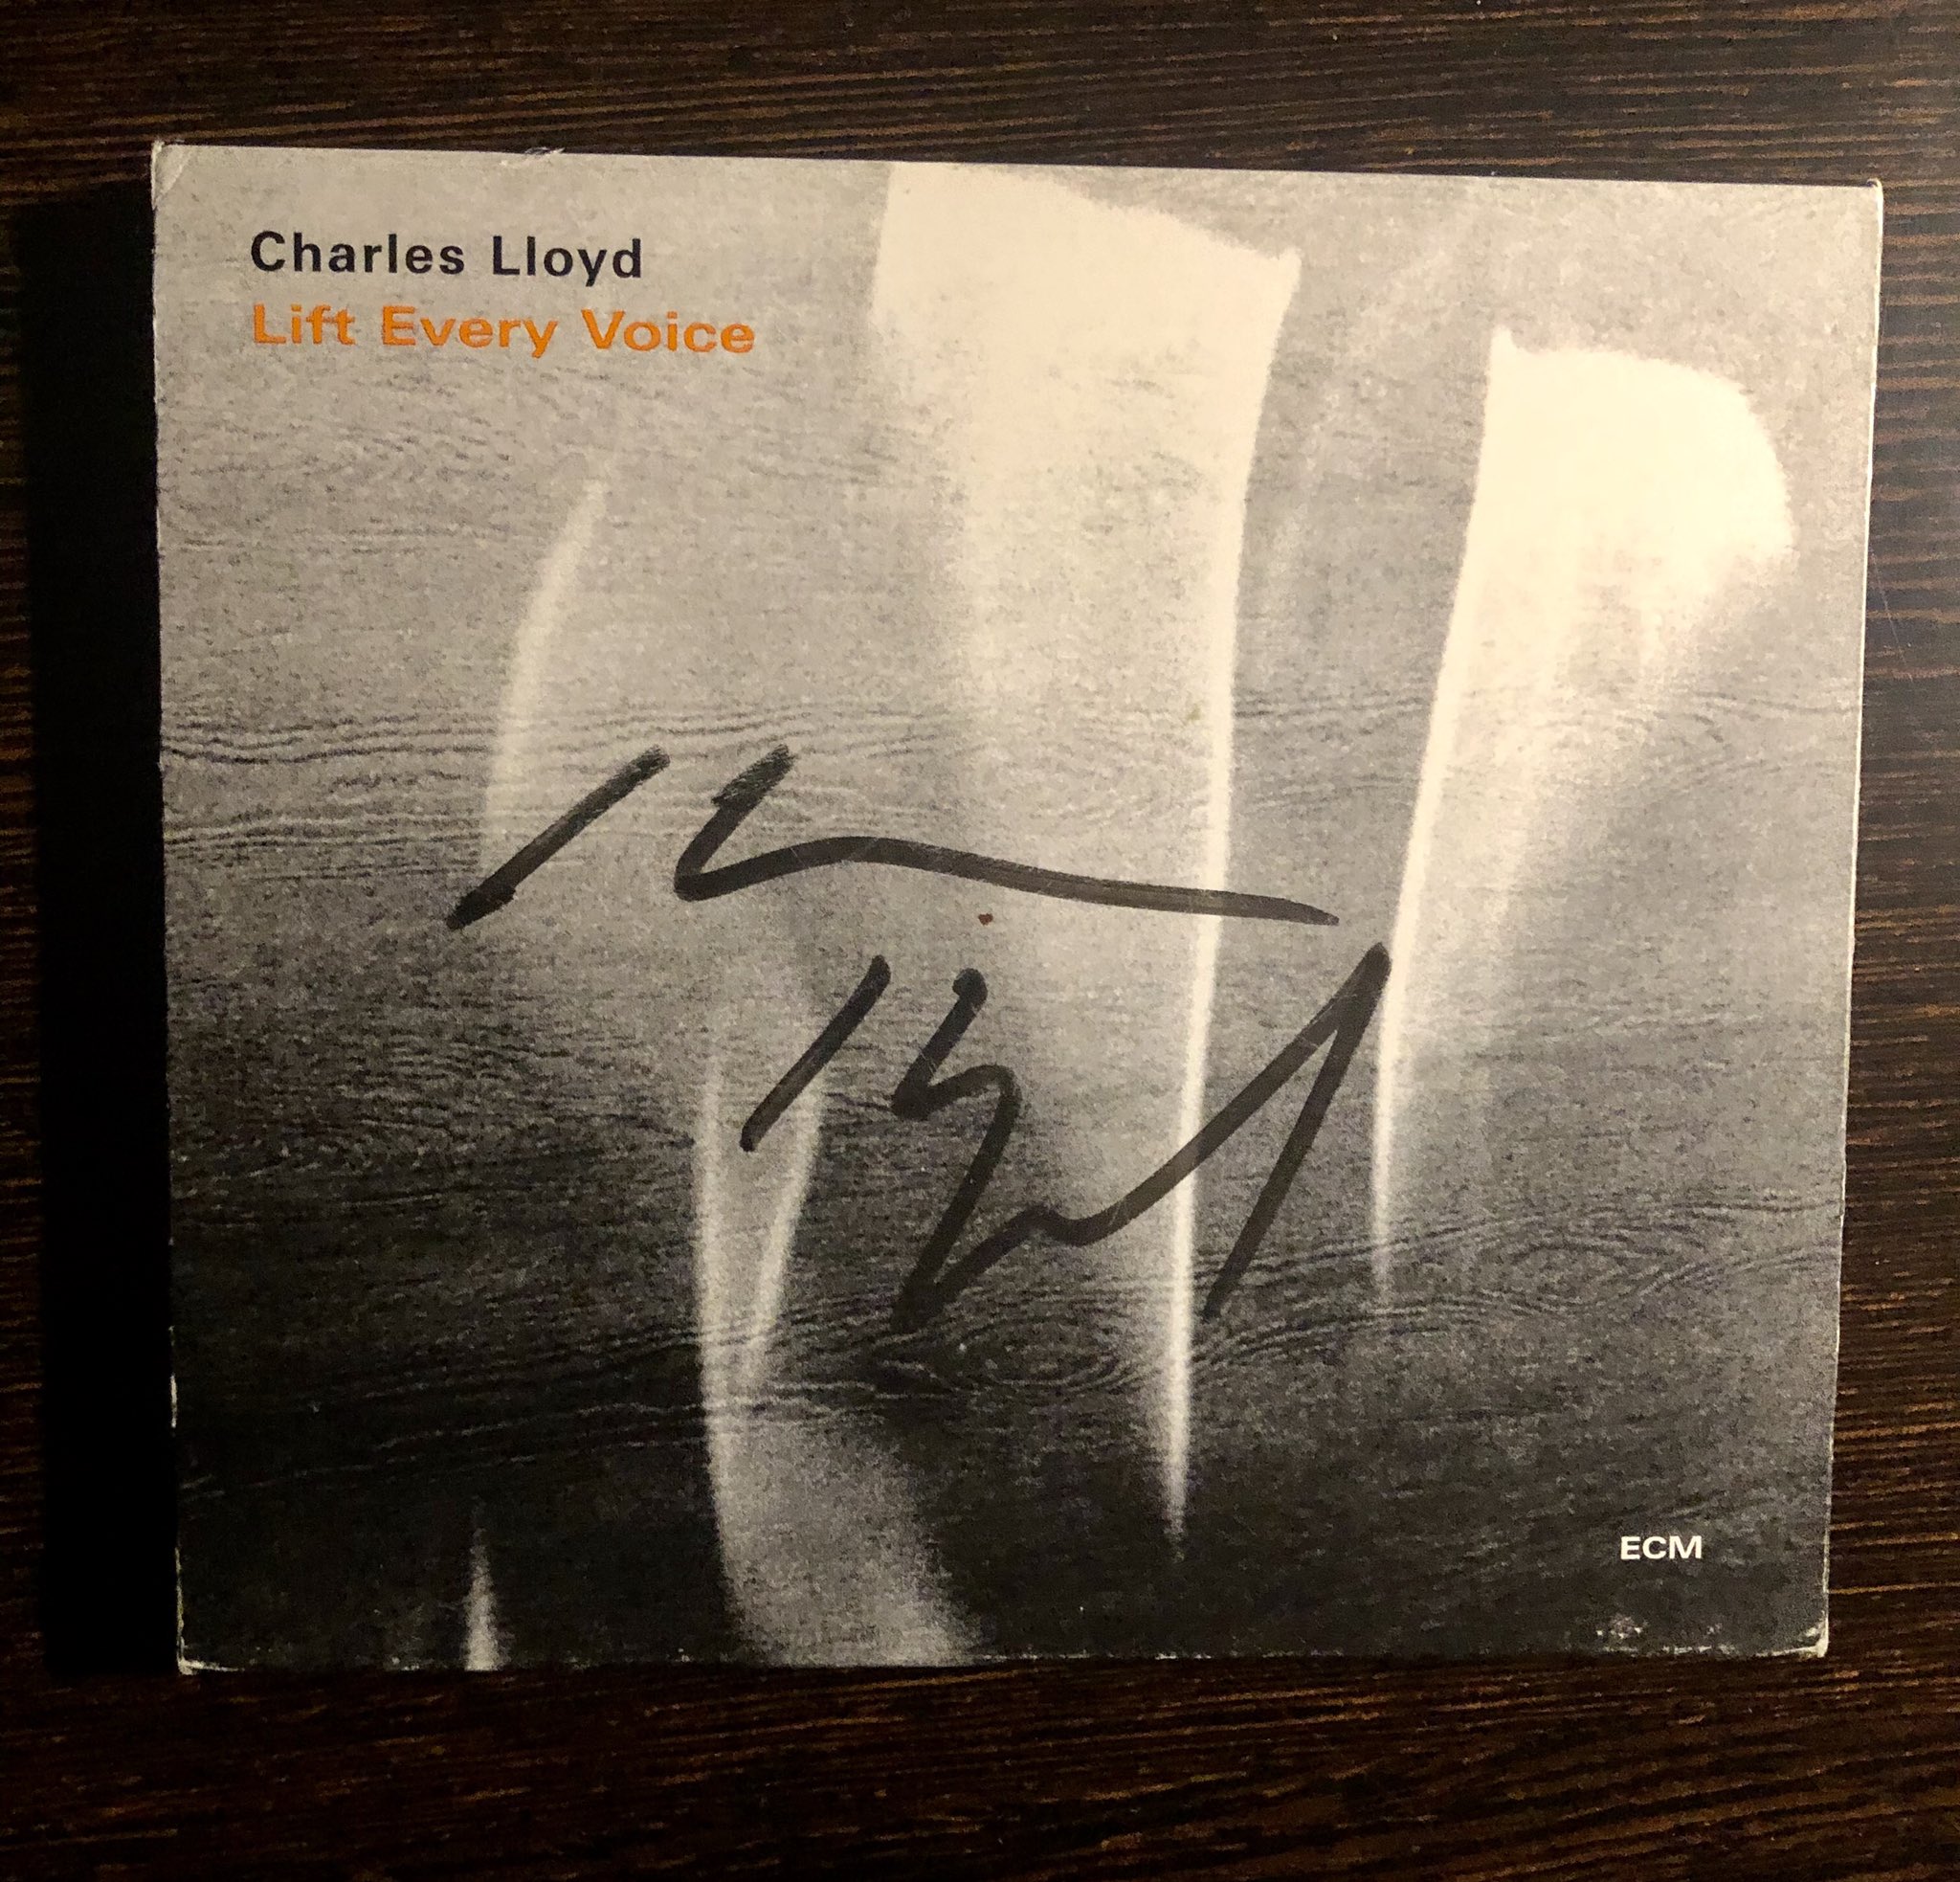 Happy Birthday Charles Lloyd - he has the best signature in jazz. 